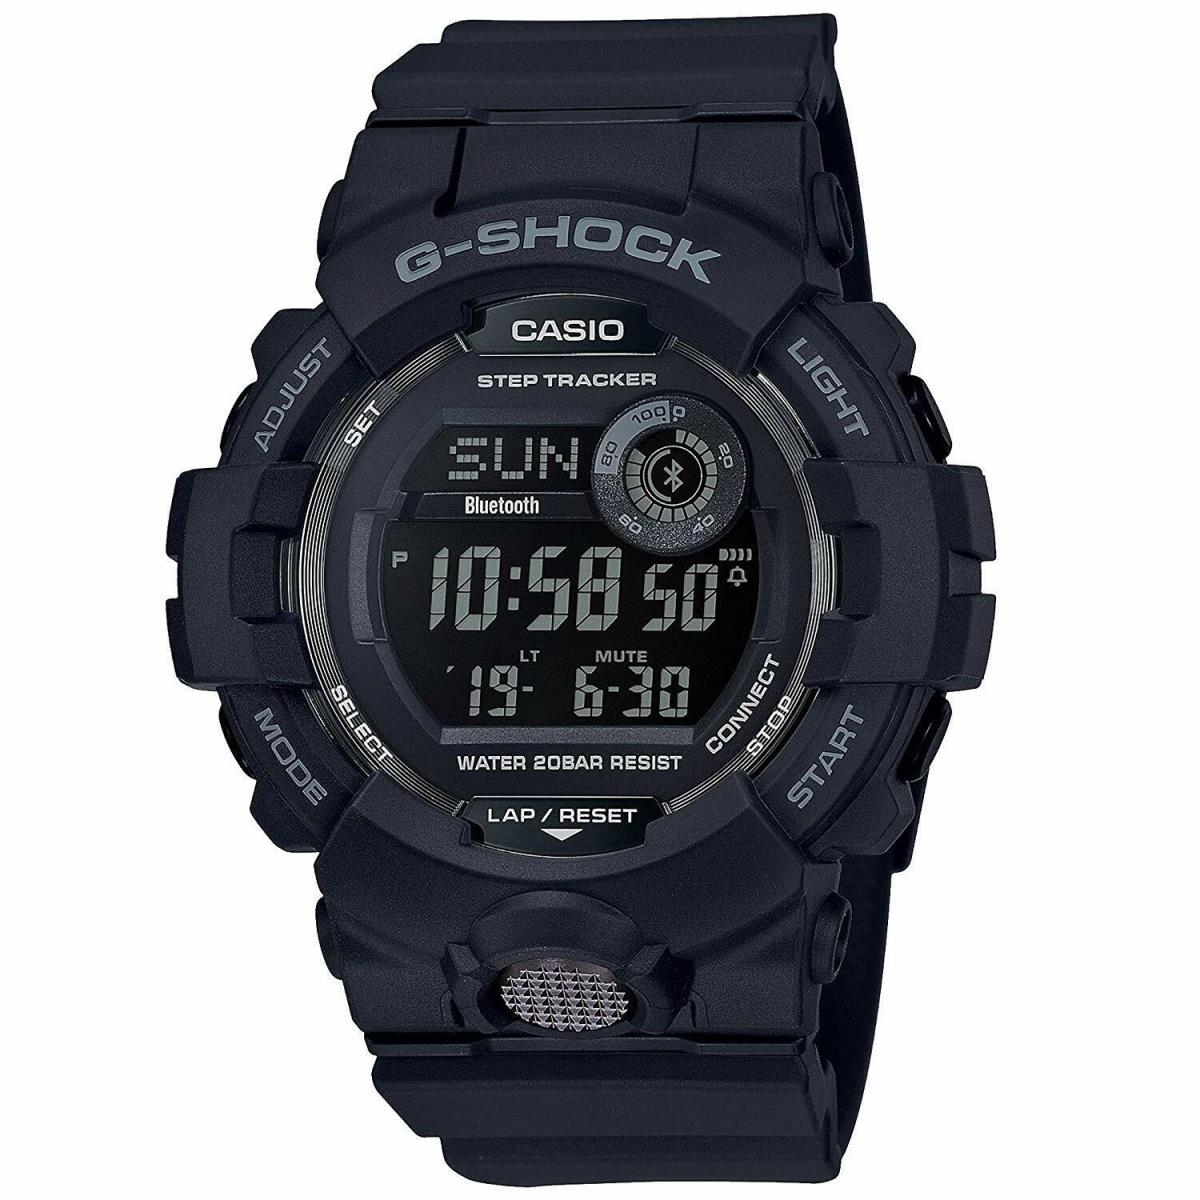 Casio G-shock GBD800-1B Super Illuminator Digital Black Watch